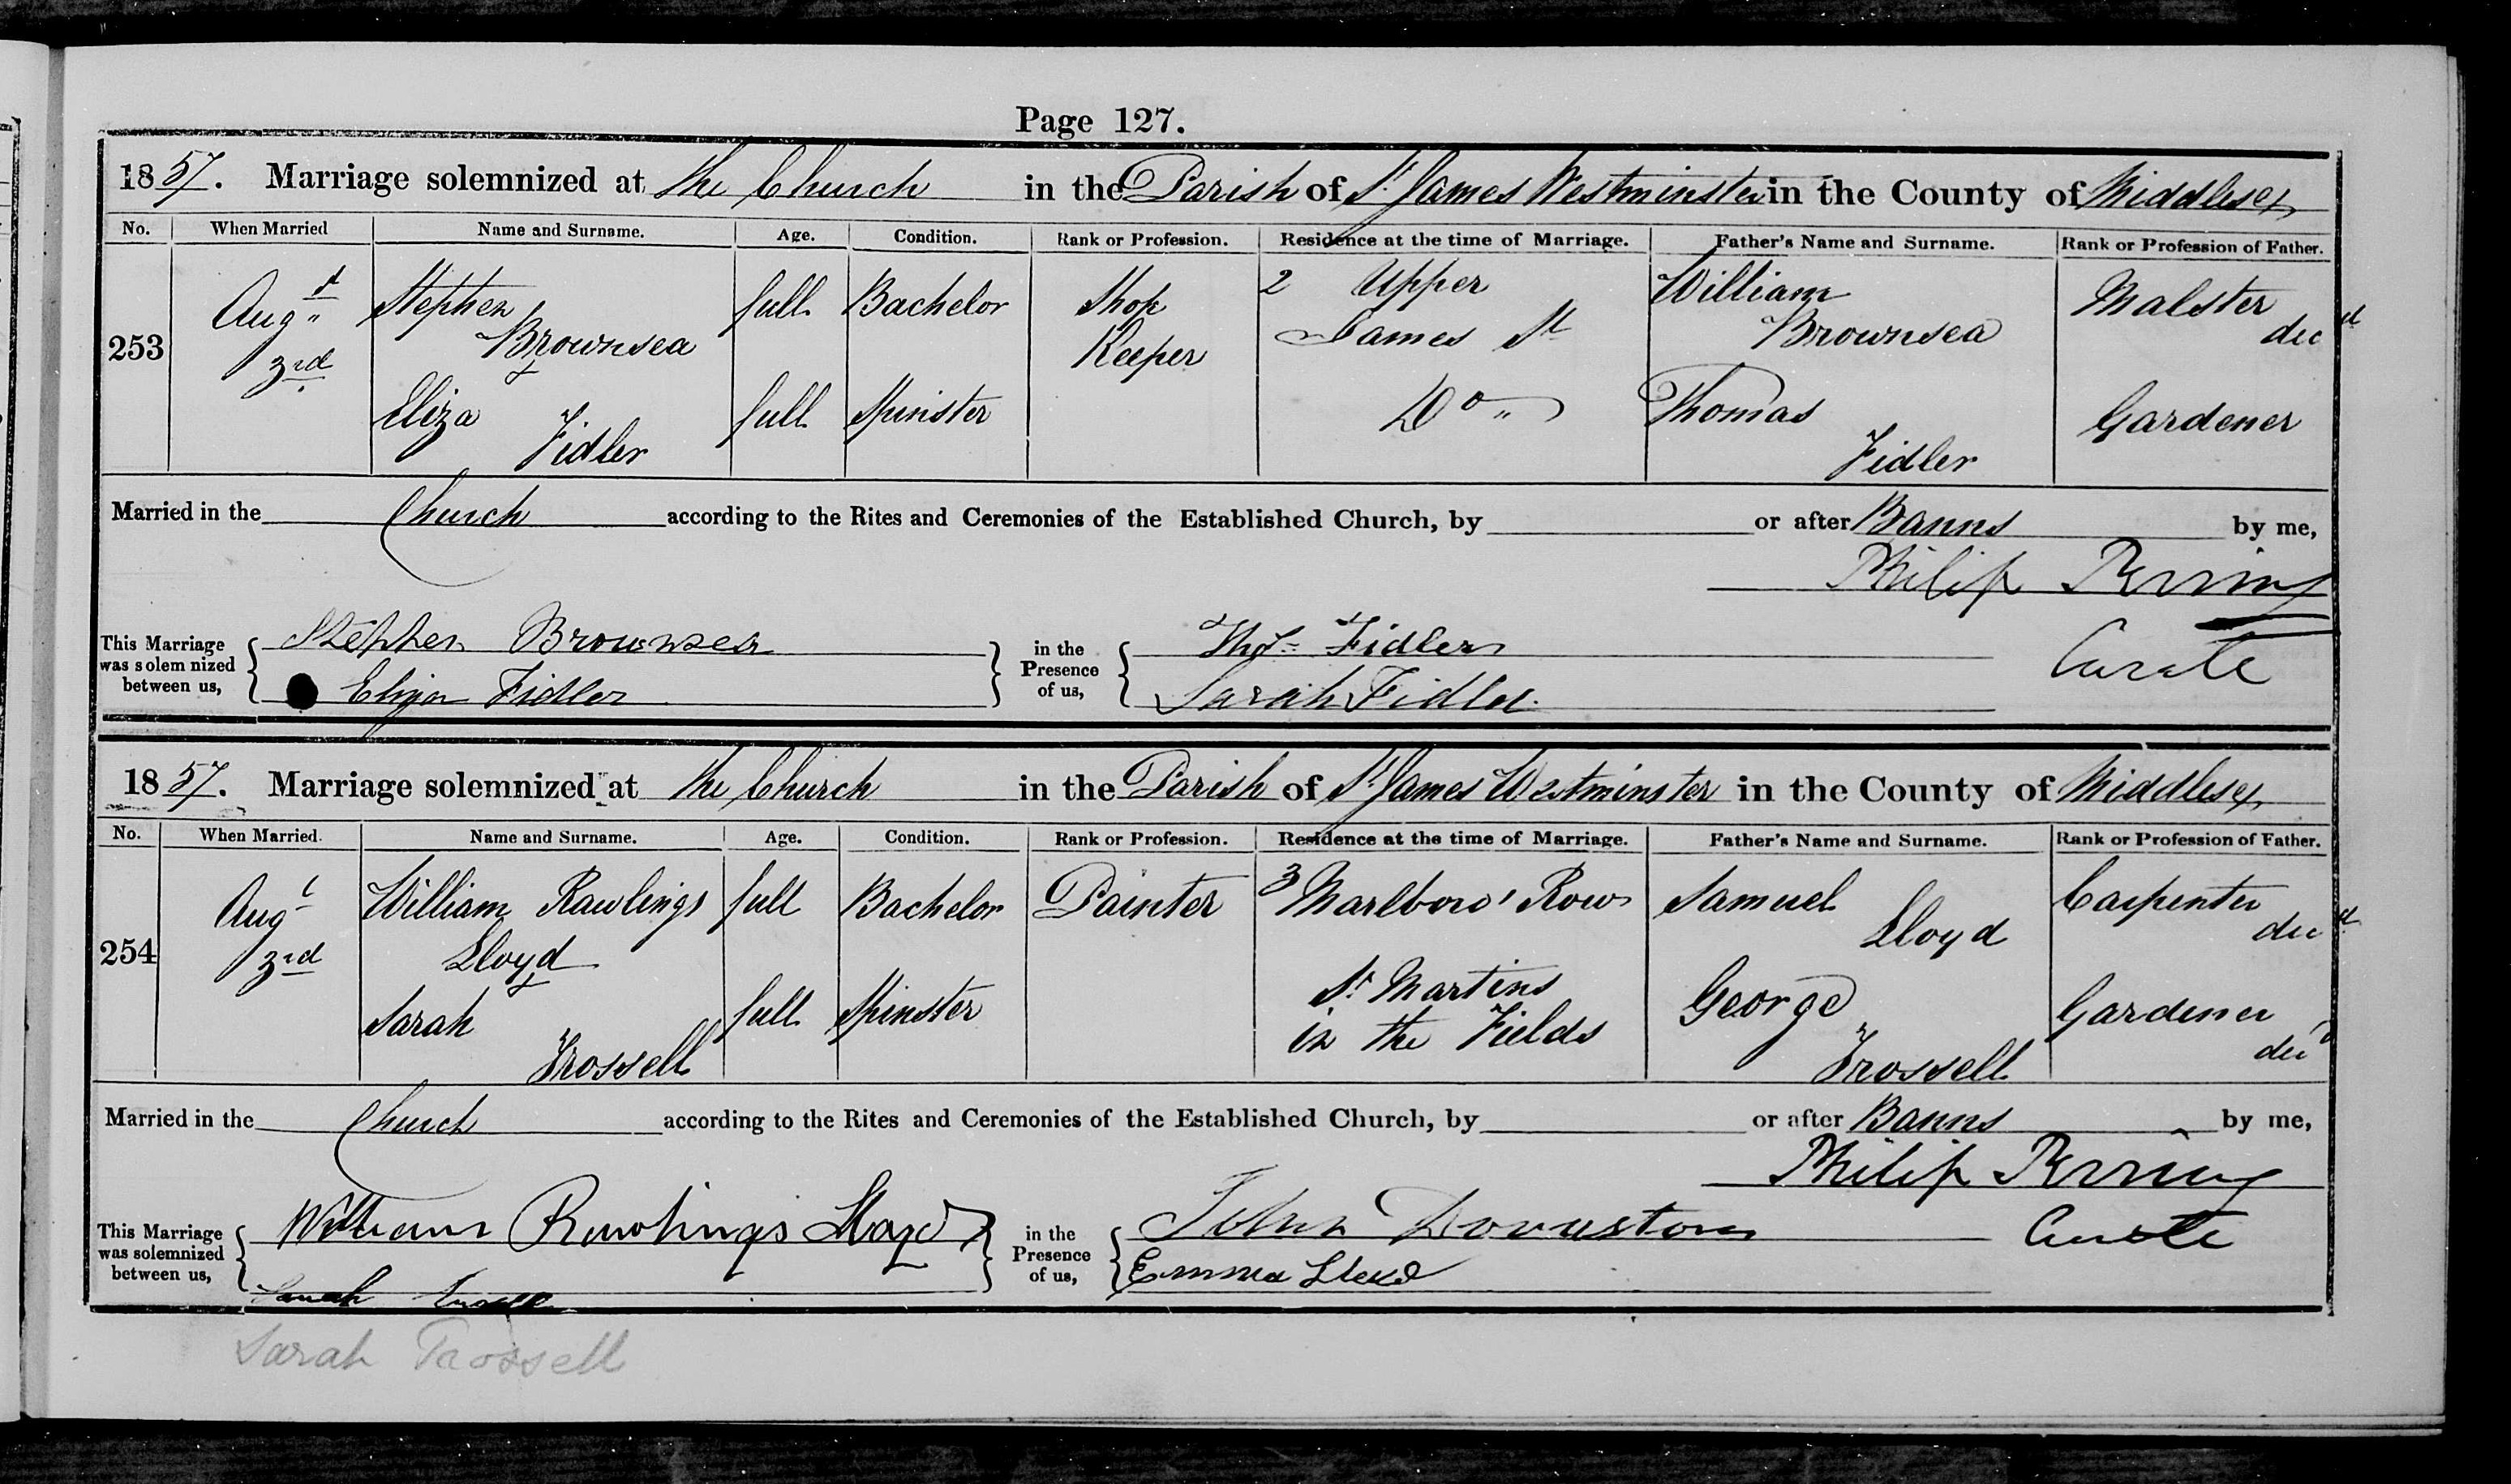 1857 marriage of Eliza Fidler to Stephen Brownsea